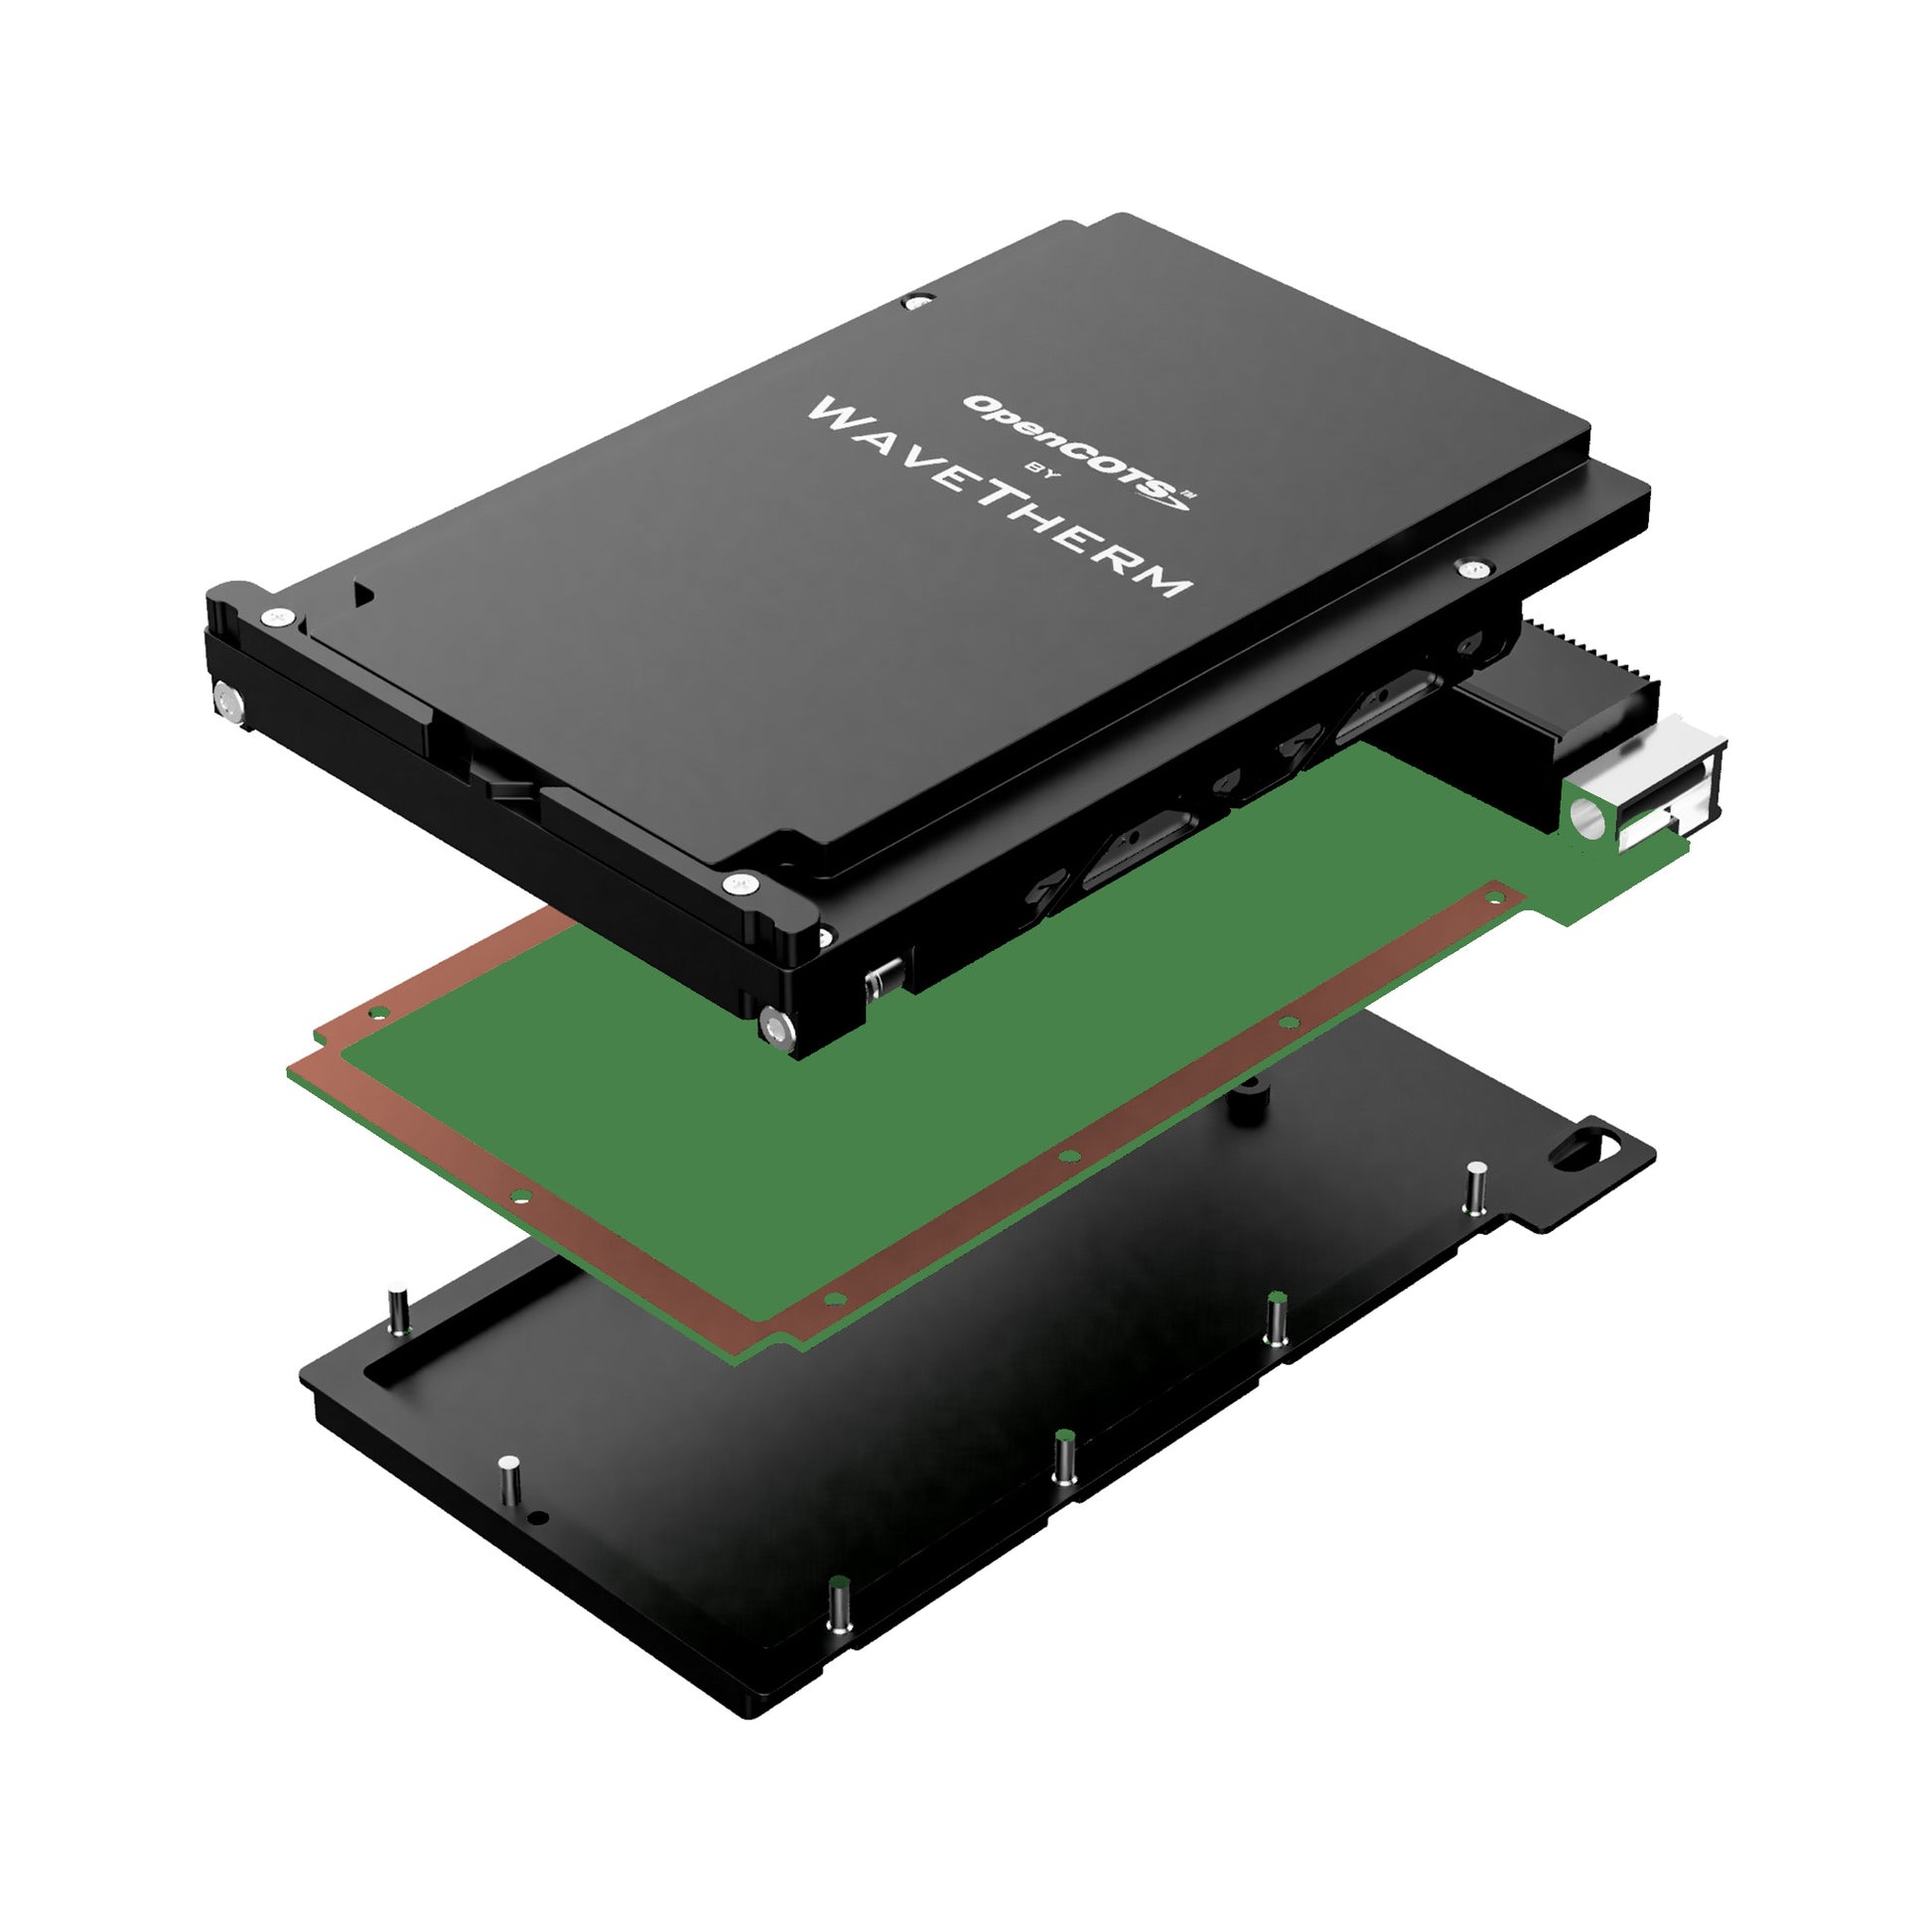 Vita 48.2 3U VPX Development Kit (160mm Thick PCB), ruggedized metal enclosure for embedded computer board 